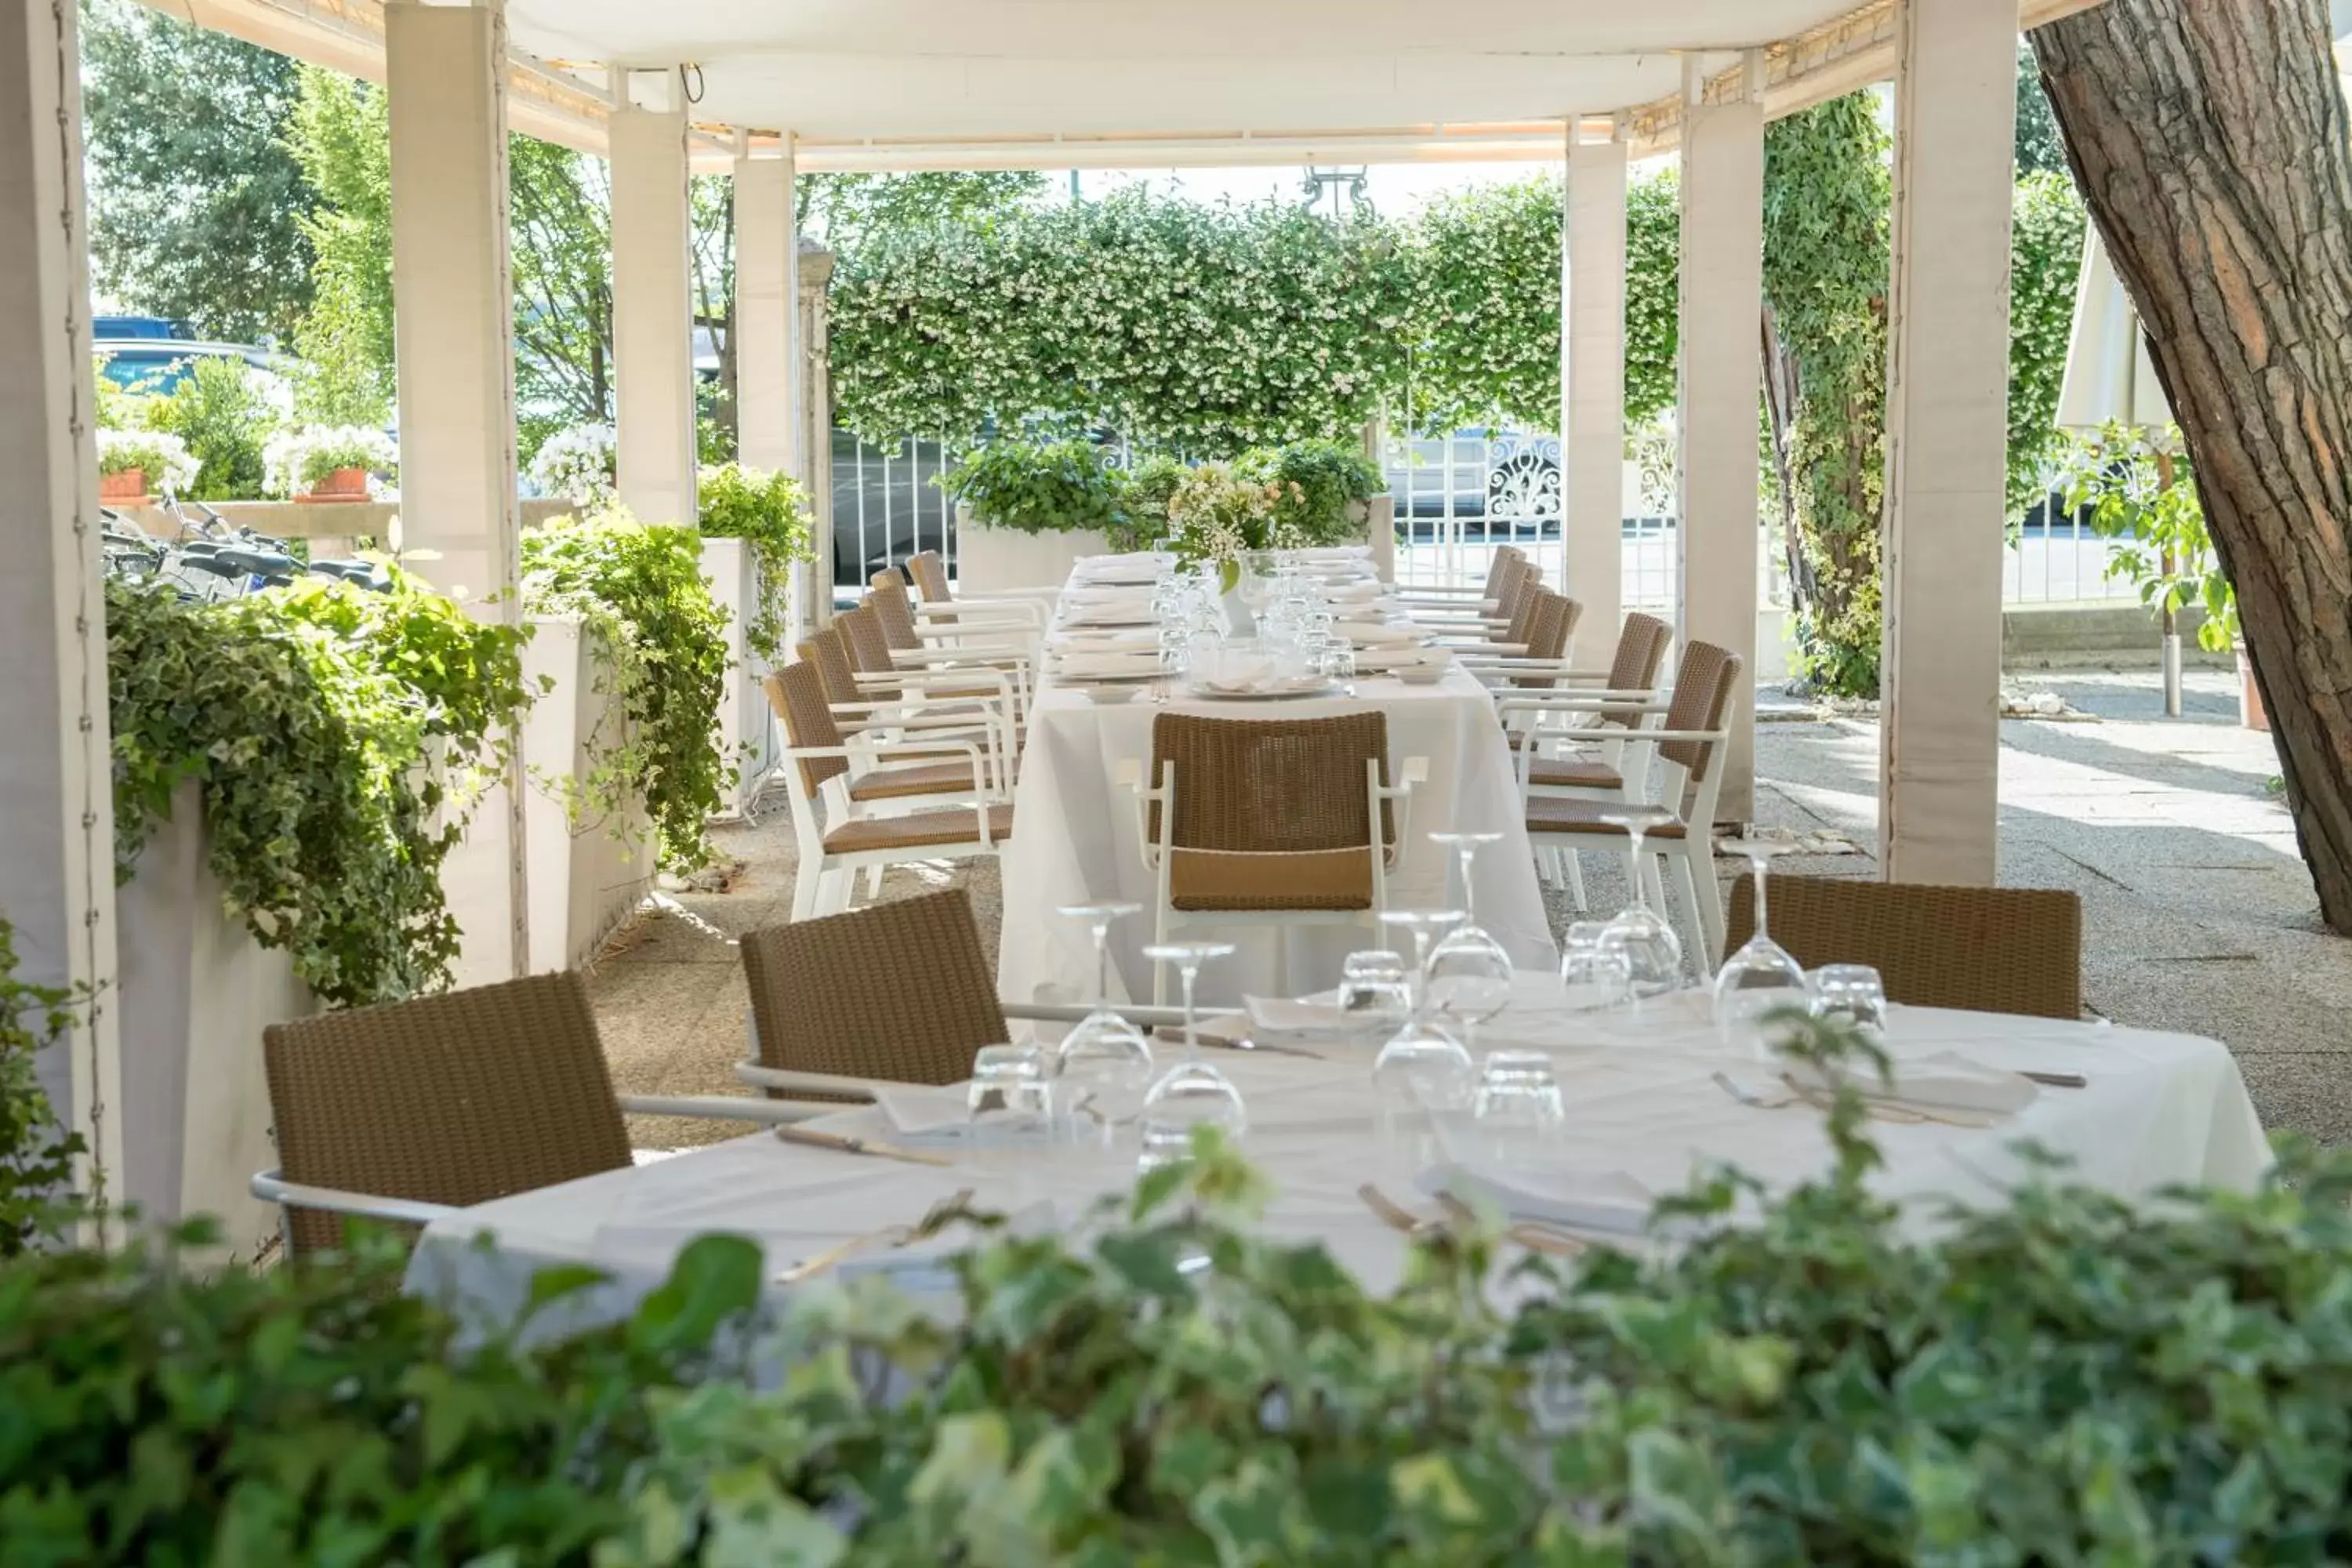 Garden, Restaurant/Places to Eat in Hotel Villa Mabapa